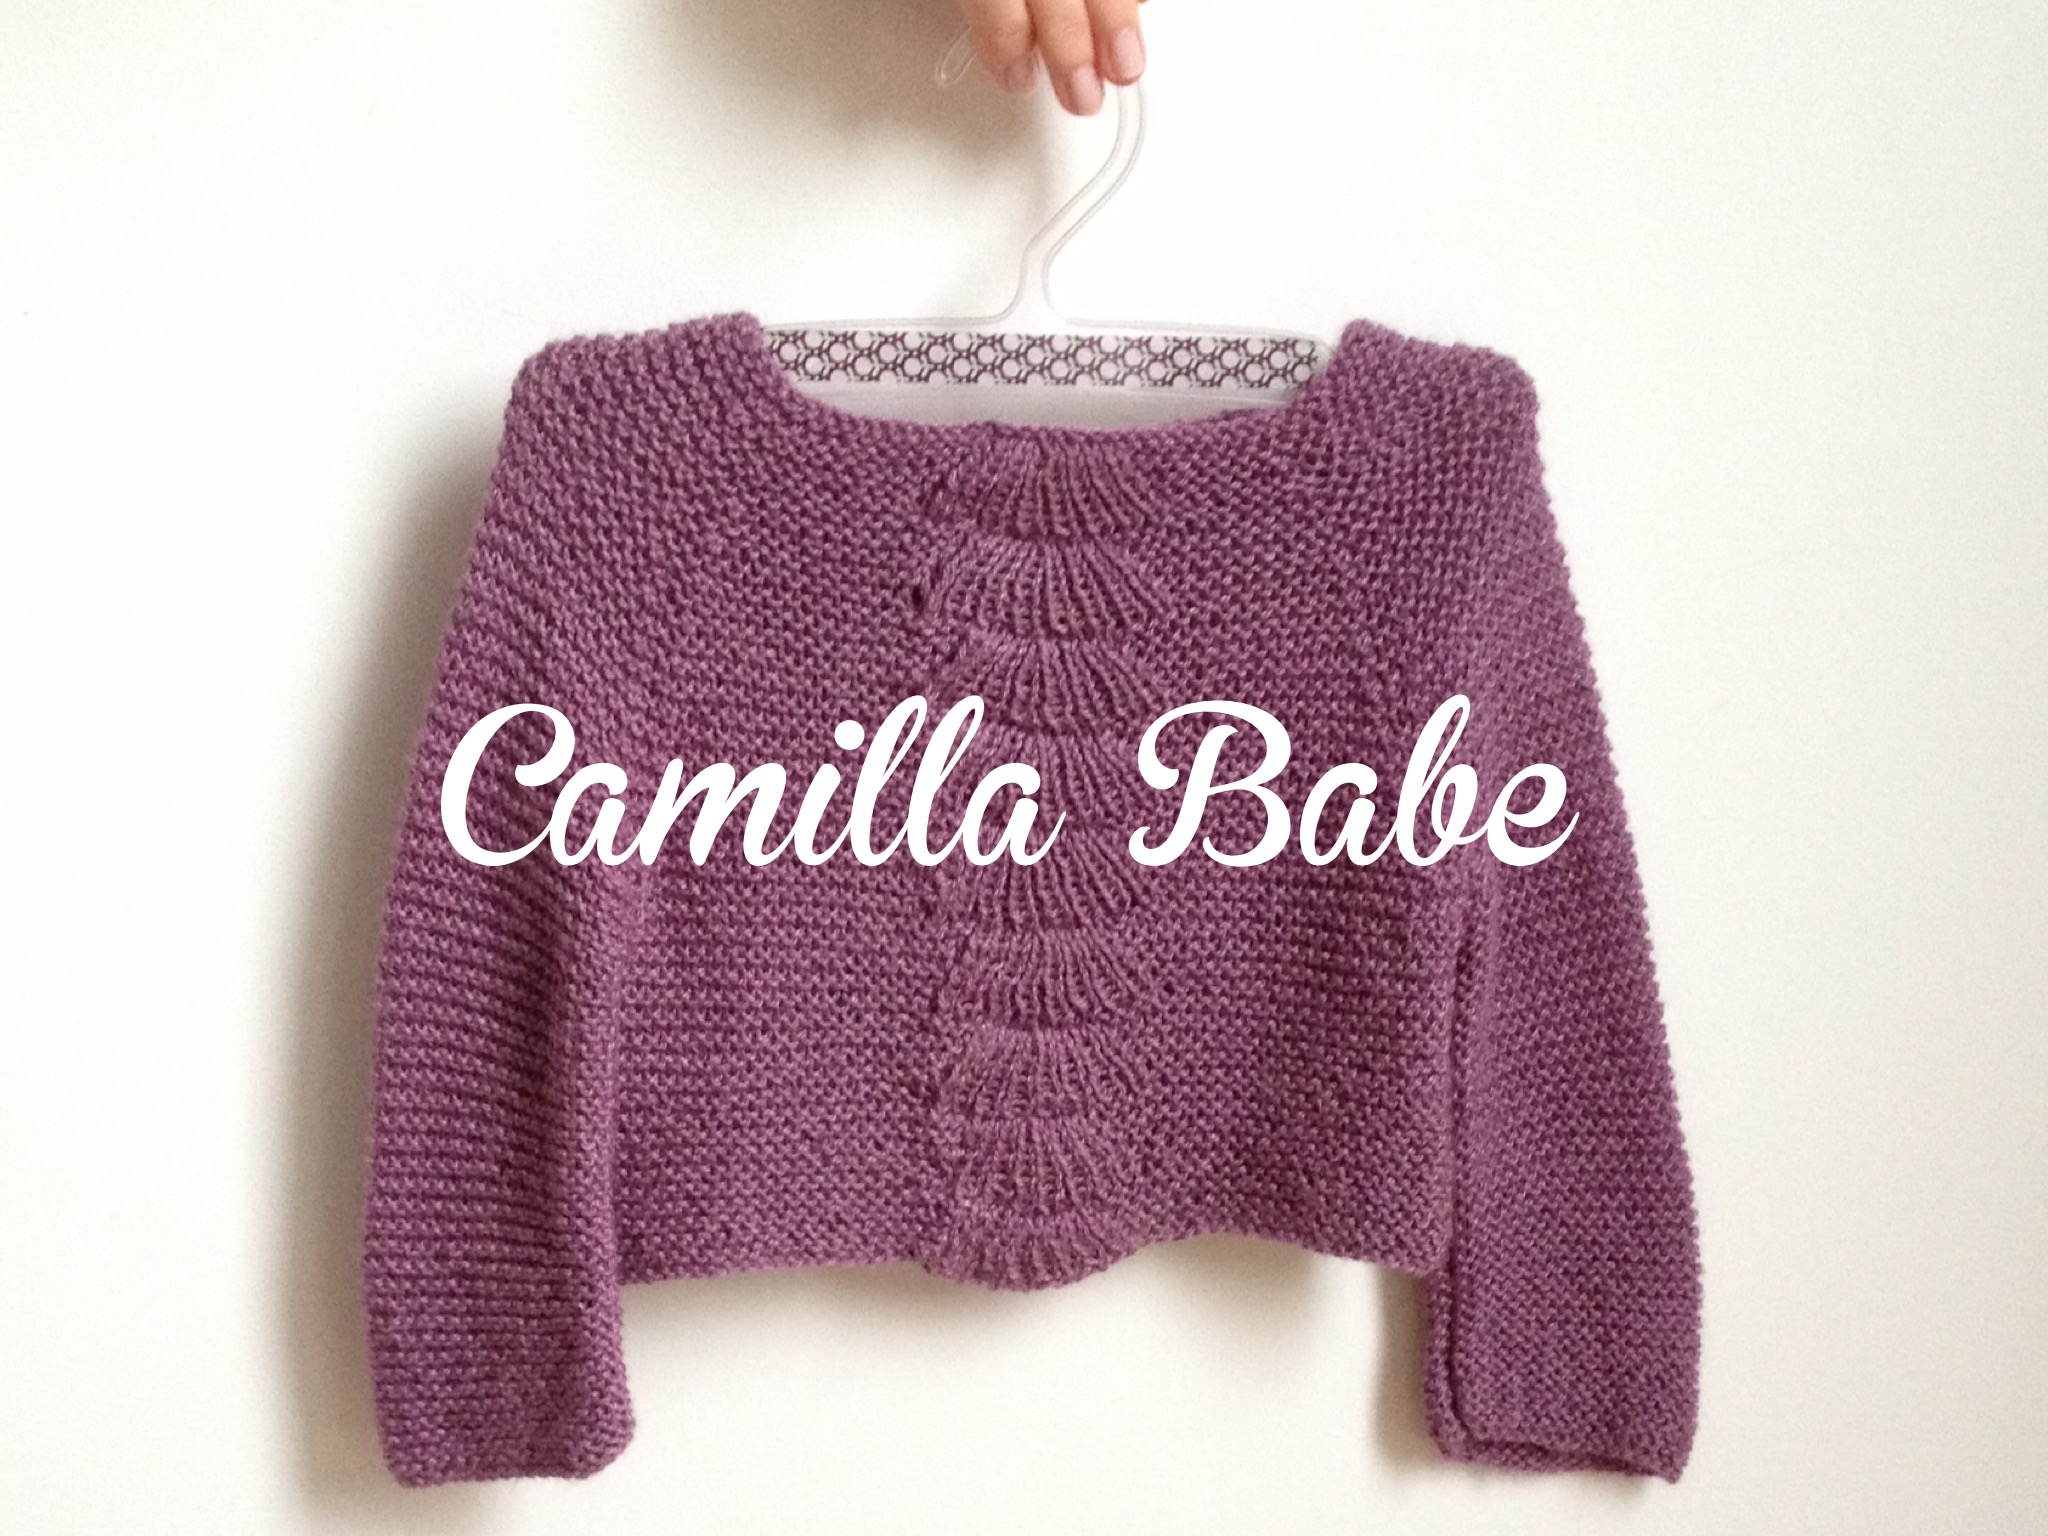 Camilla babe (cadeau handmade #2)